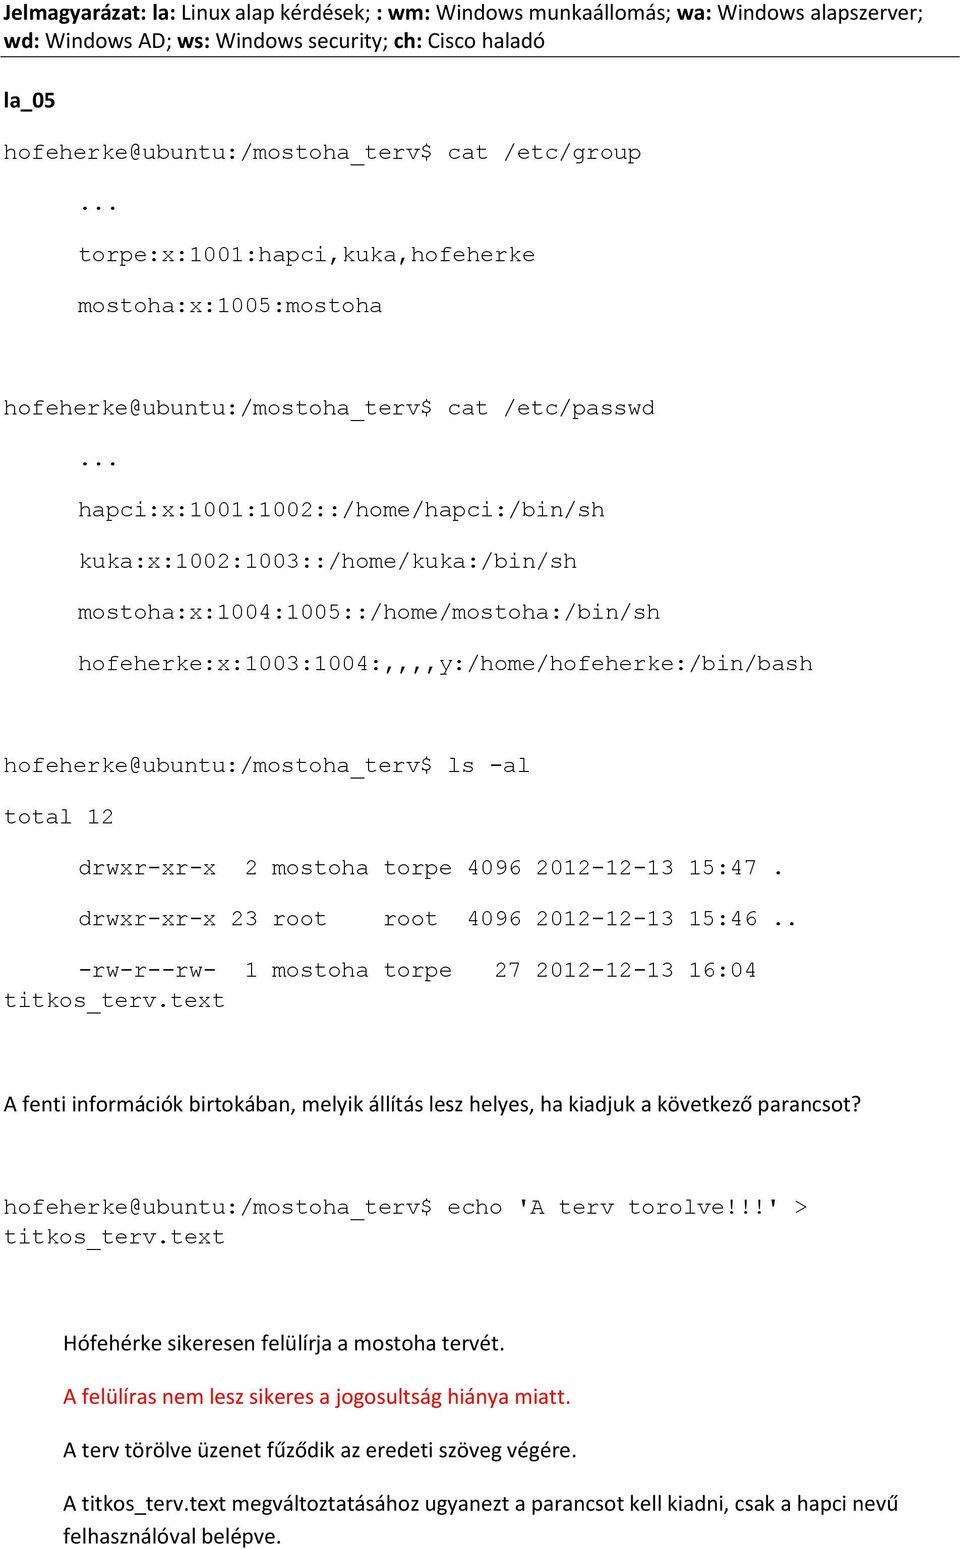 hofeherke@ubuntu:/mostoha_terv$ ls -al total 12 drwxr-xr-x 2 mostoha torpe 4096 2012-12-13 15:47. drwxr-xr-x 23 root root 4096 2012-12-13 15:46.